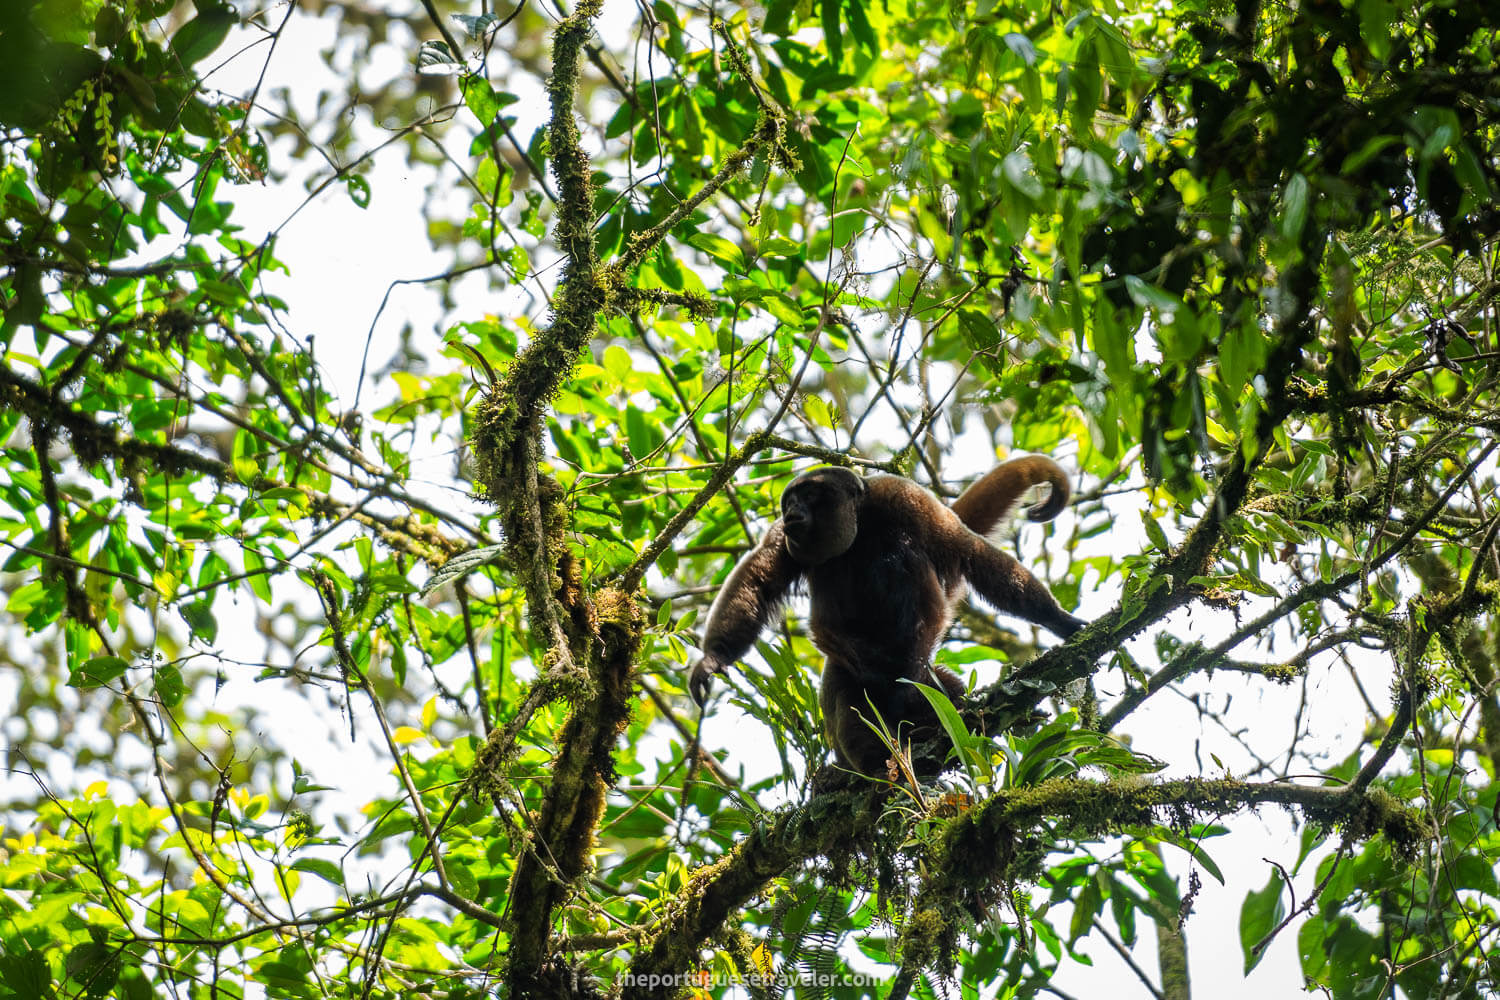 A monkey in the Sumaco Volcano Trek in the Amazon Rainforest